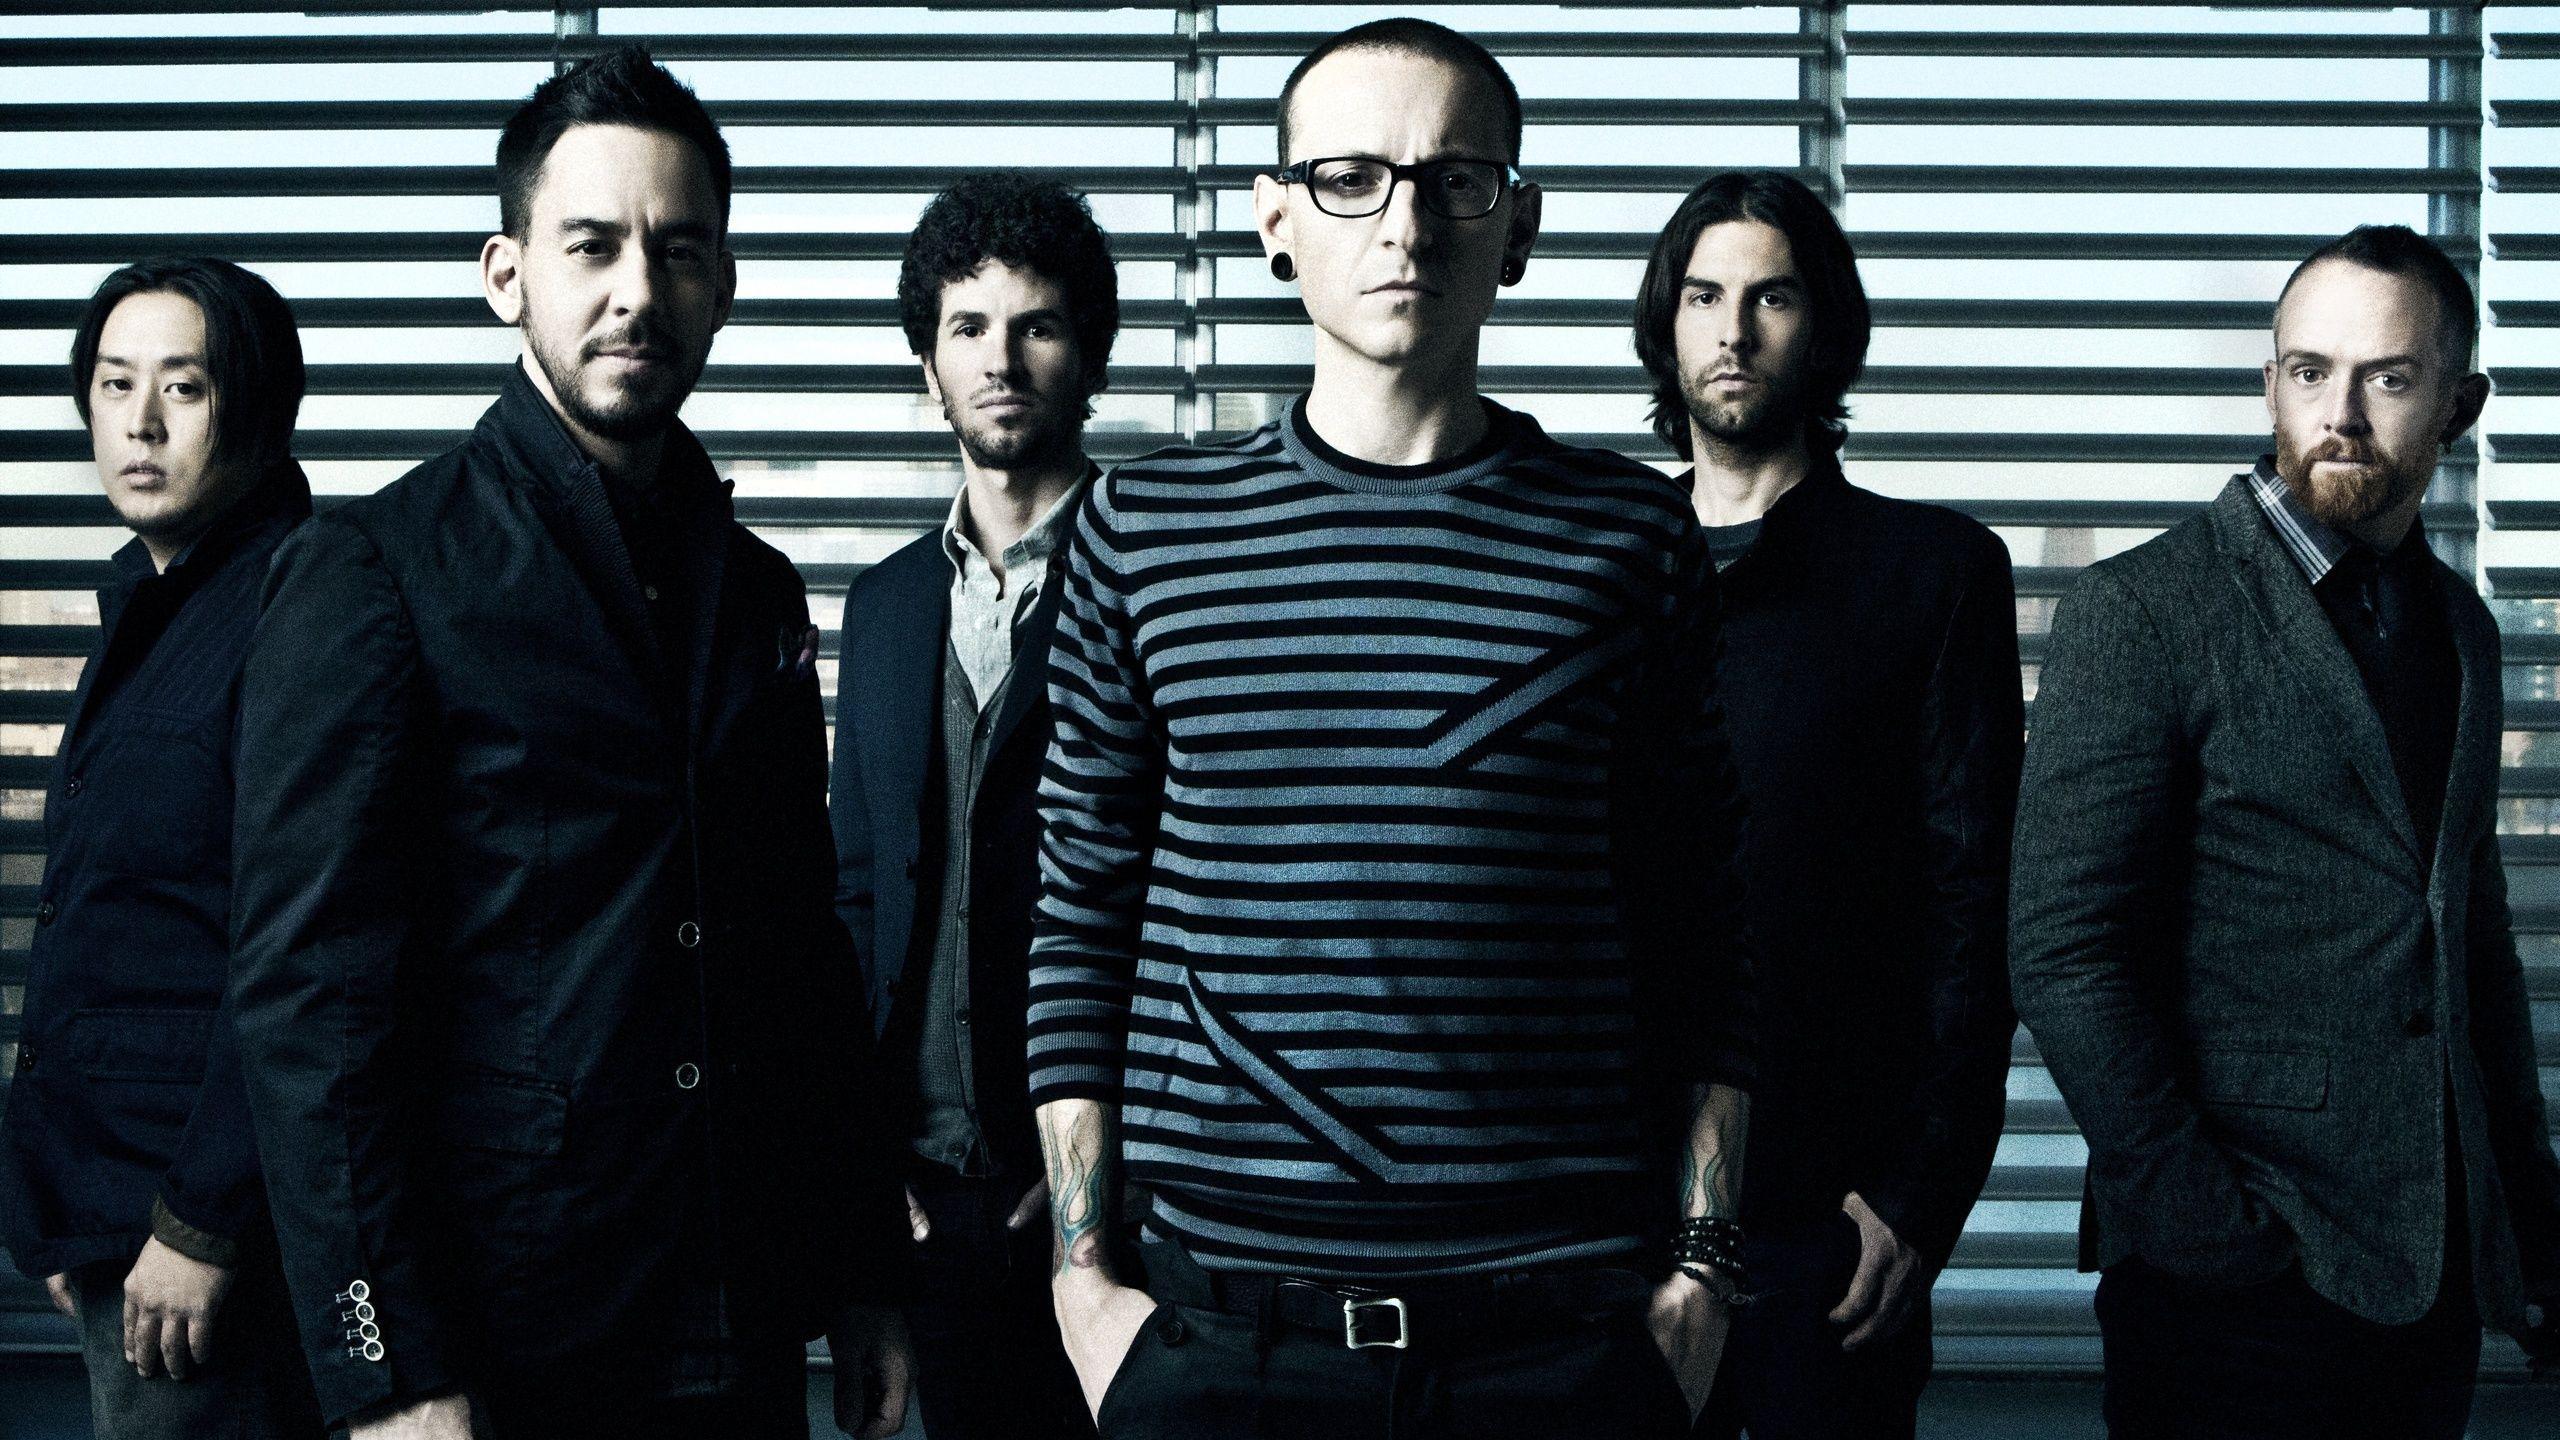 Chester, Rob, Linkin Park, Mike, Mr Khan, Promo, Phoenix